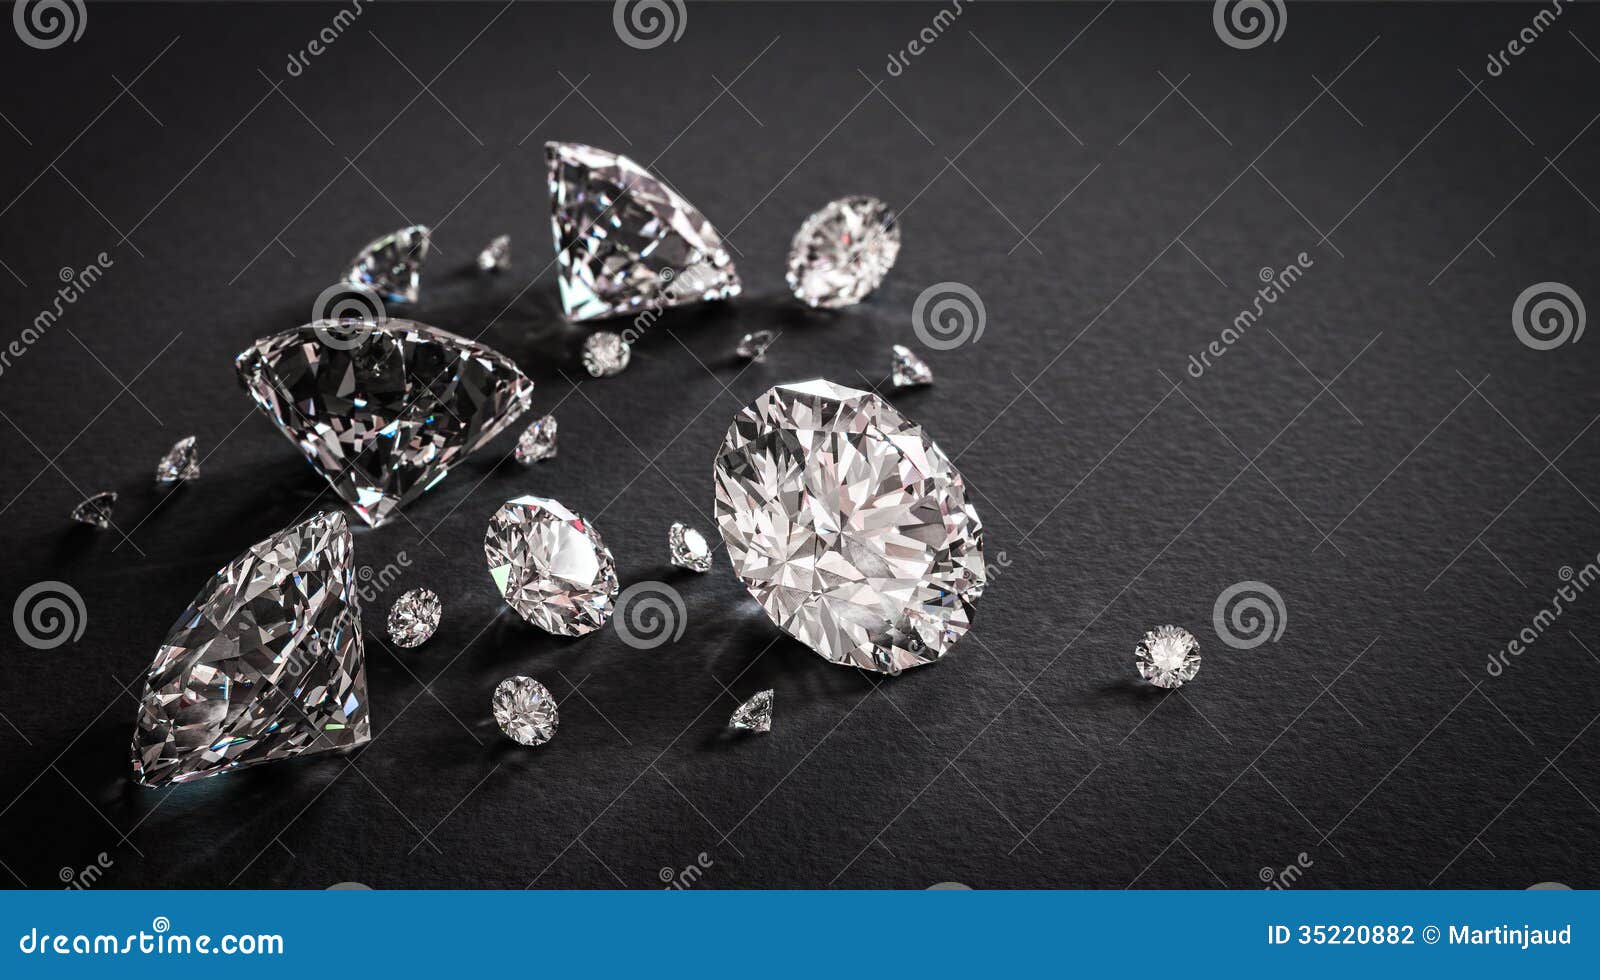 shiny diamonds on black background